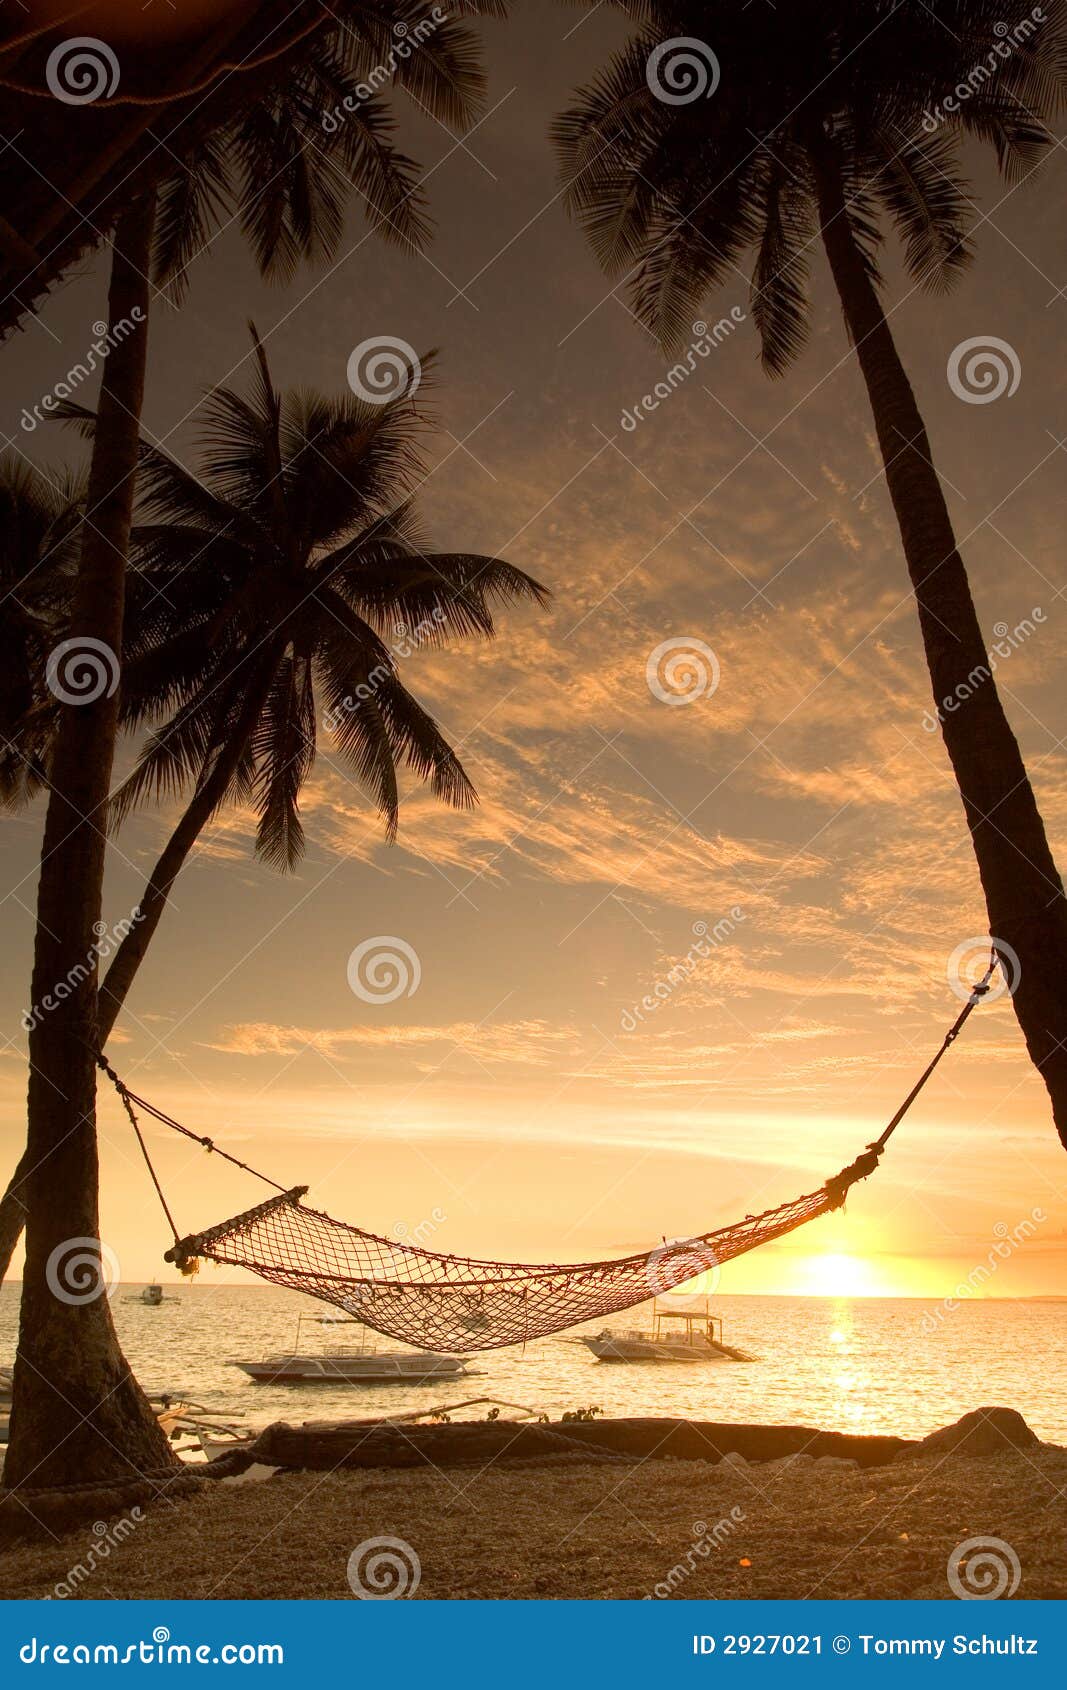 hammock and tall palm trees frame a golden sunset beside a calm 